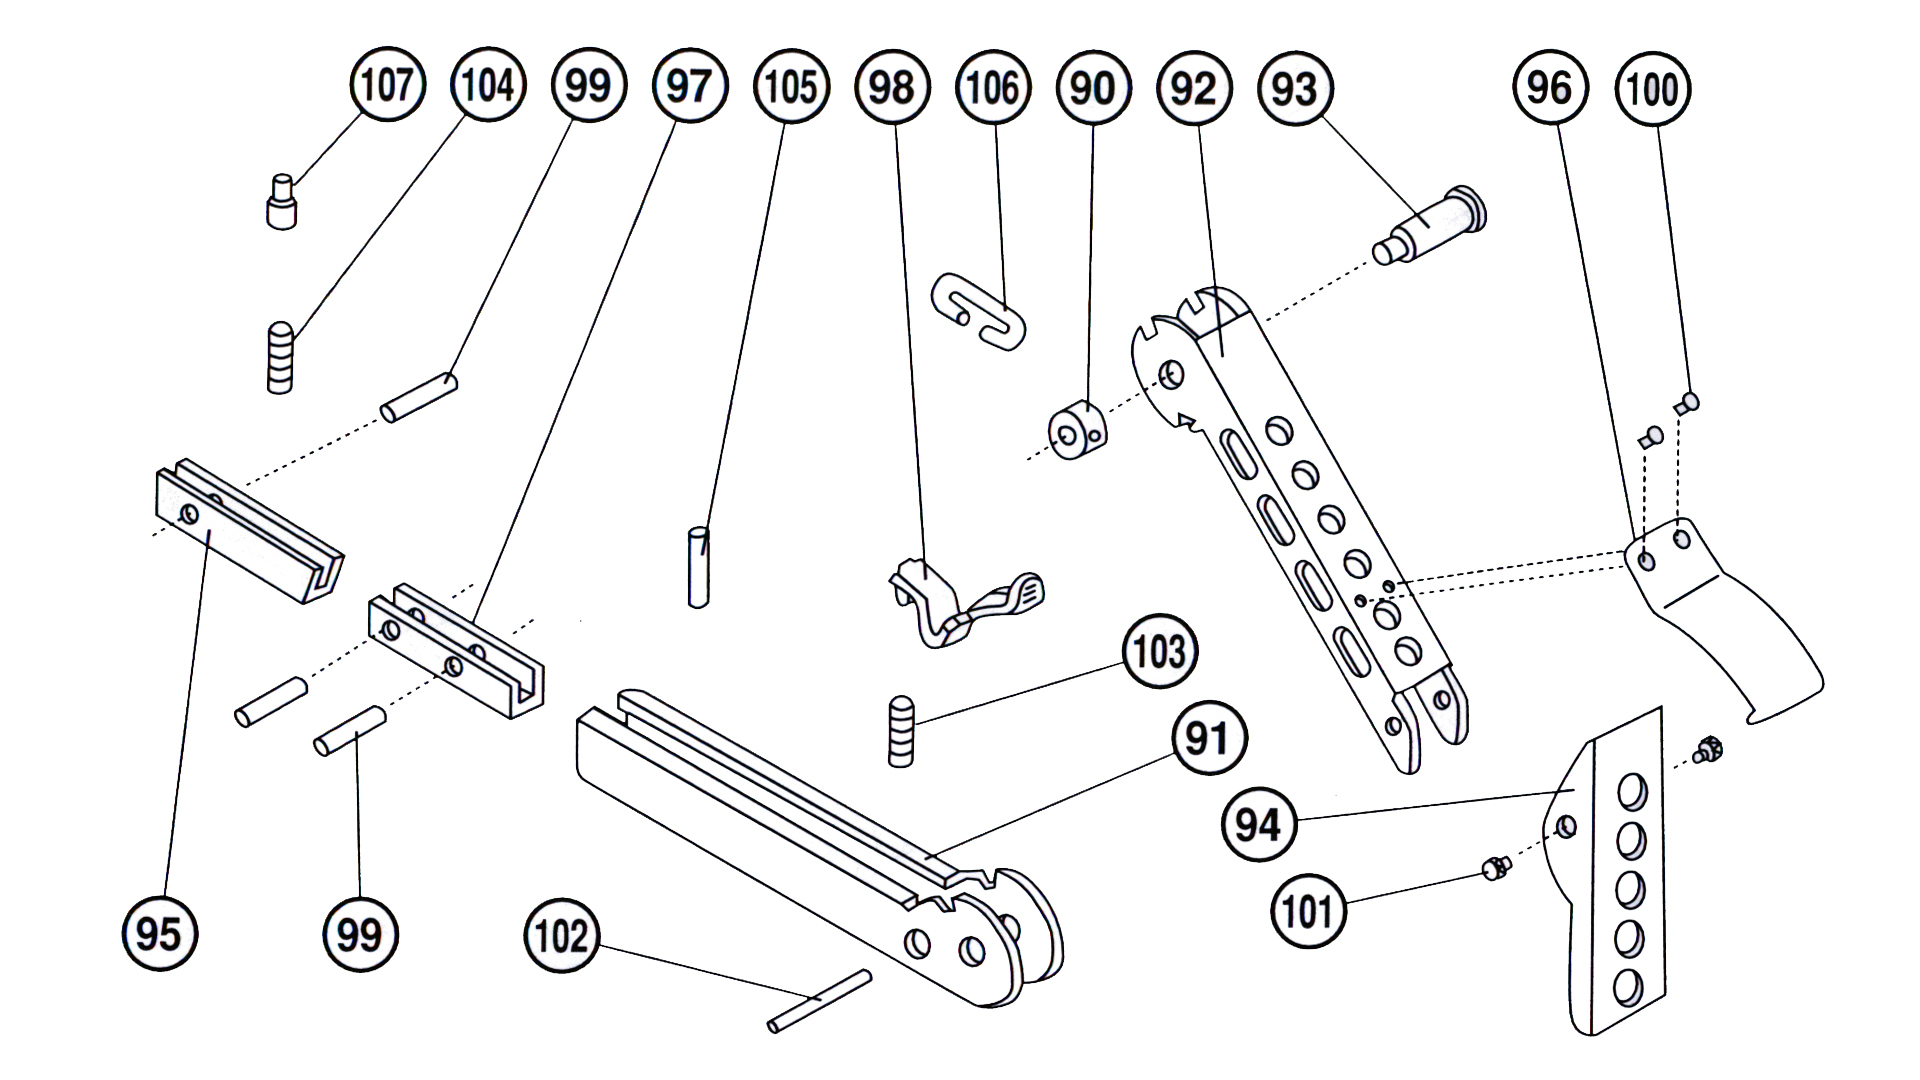 M-100 Folding Stock Diagram